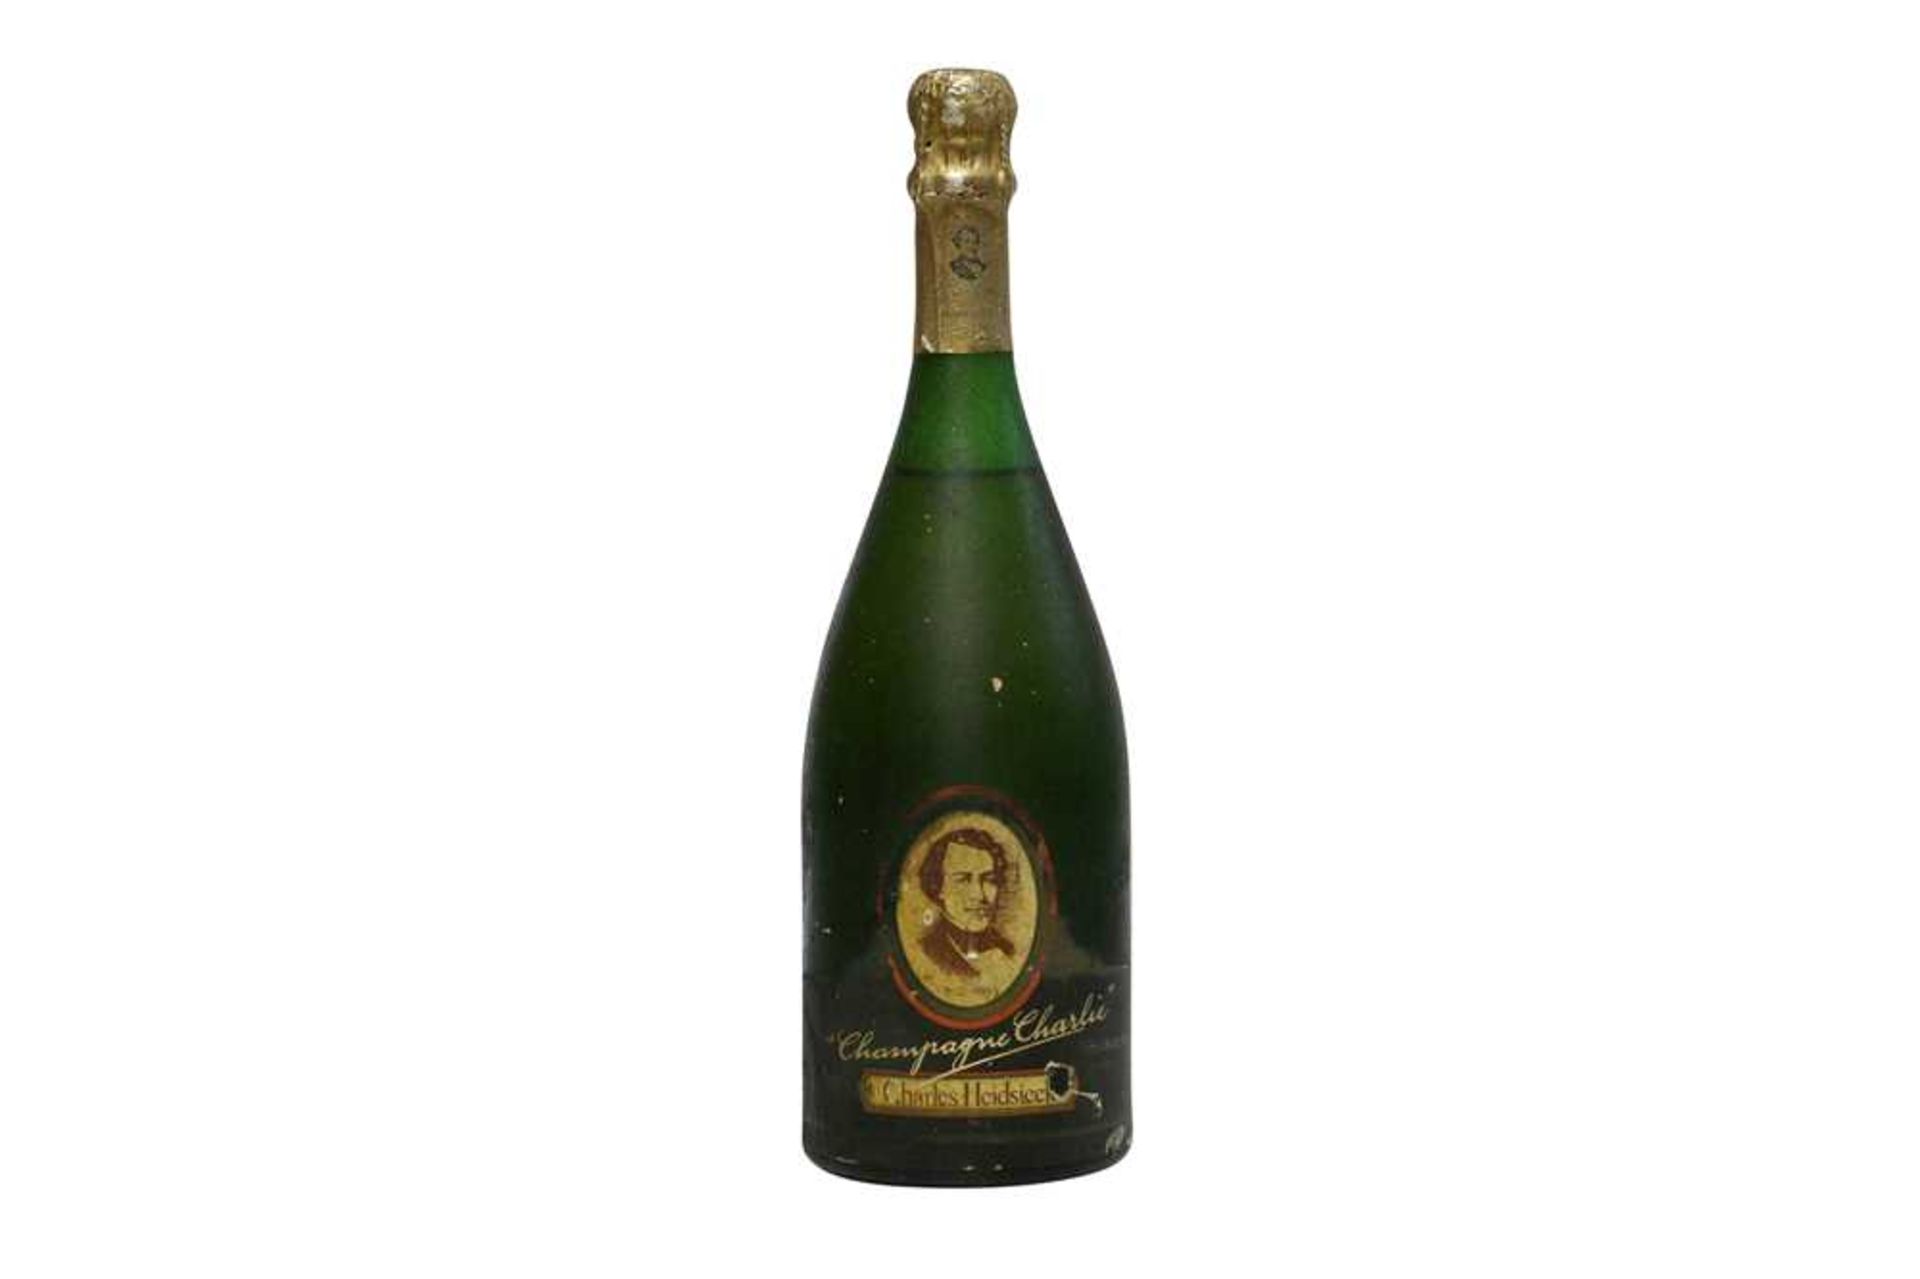 Charles Heidsieck, Champagne Charlie, Reims, 1983, one bottle